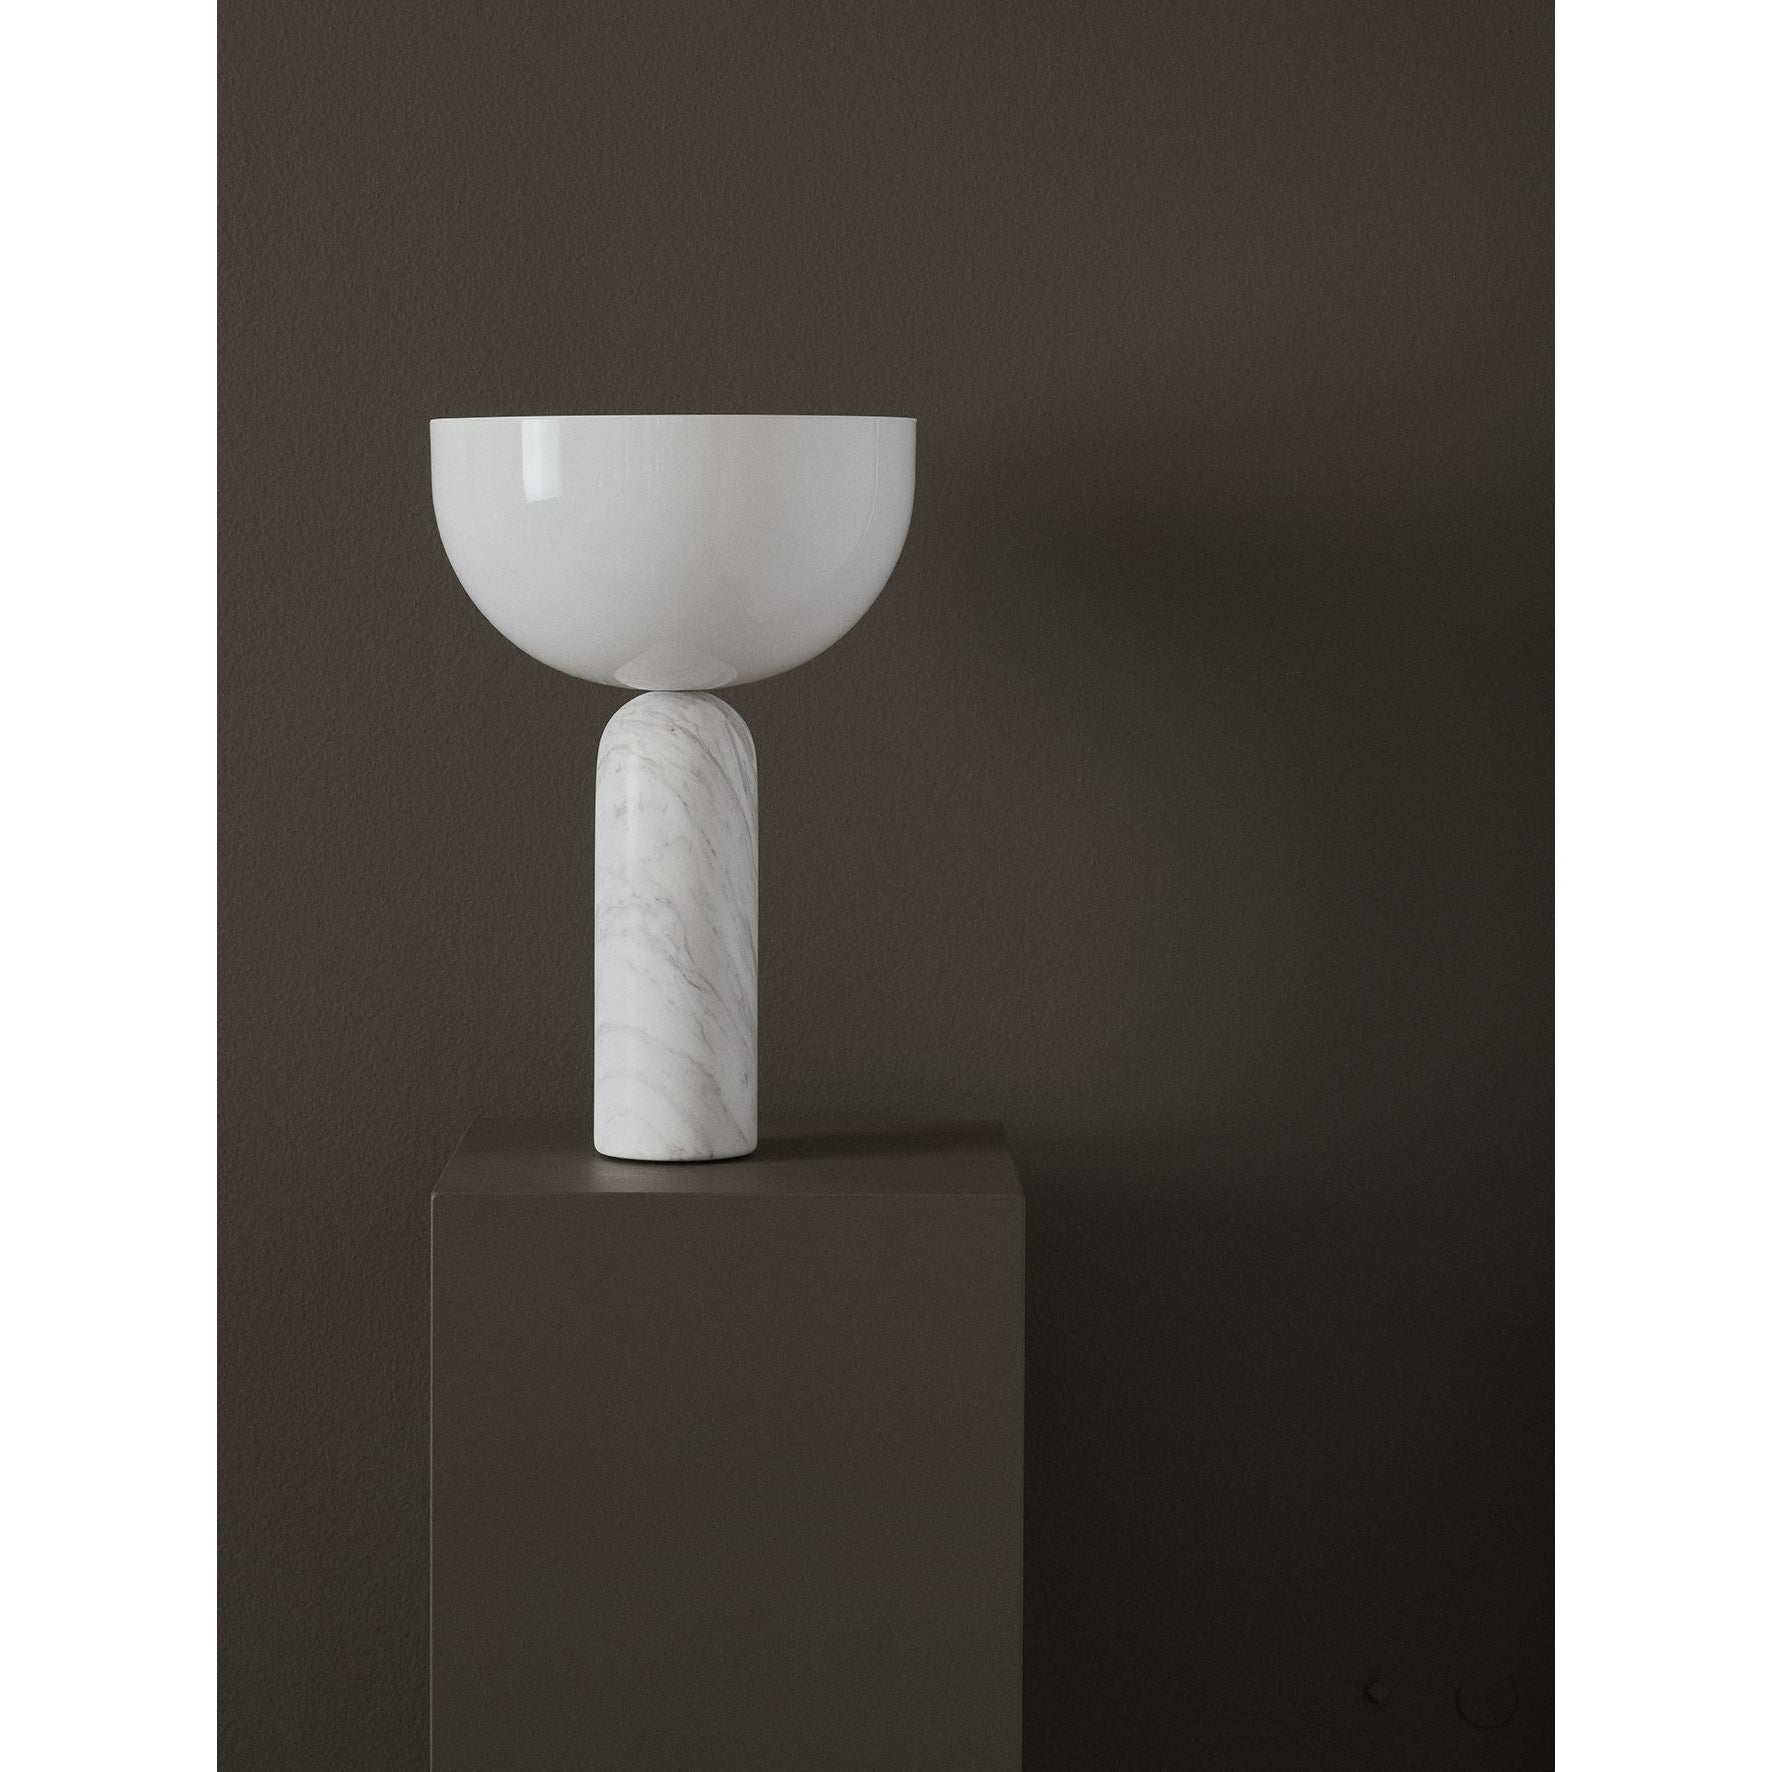 New Works Kizu bordslampa vit carrara marmor, stor